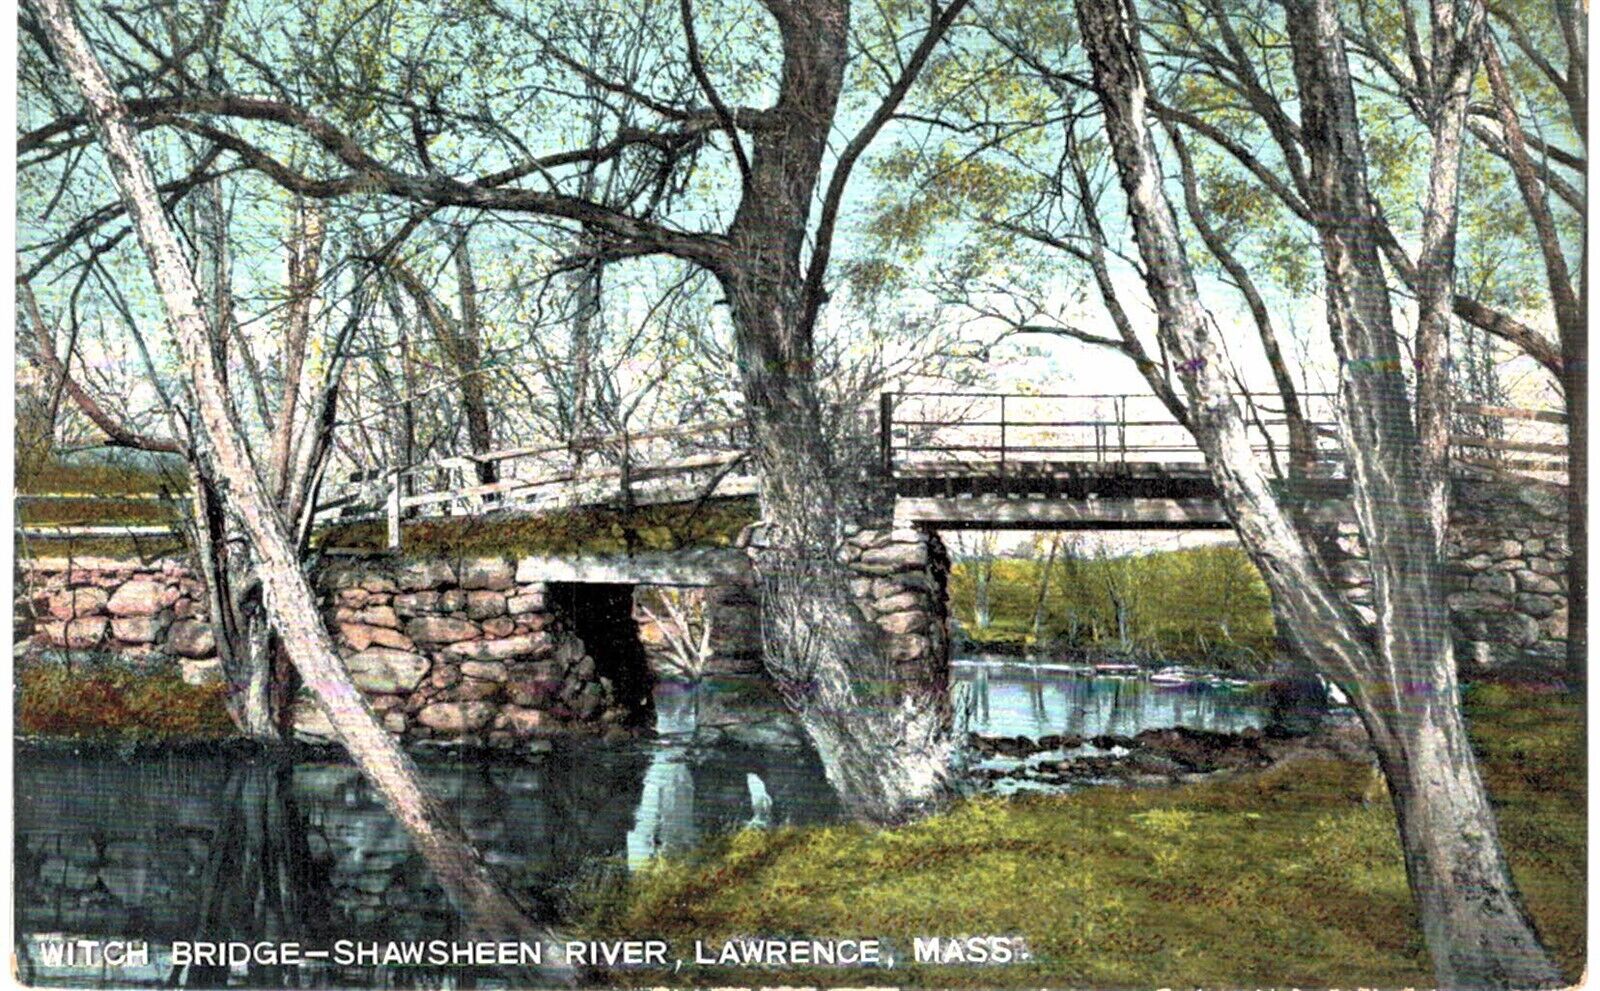 Lawrence Witch Bridge 1910 MA 